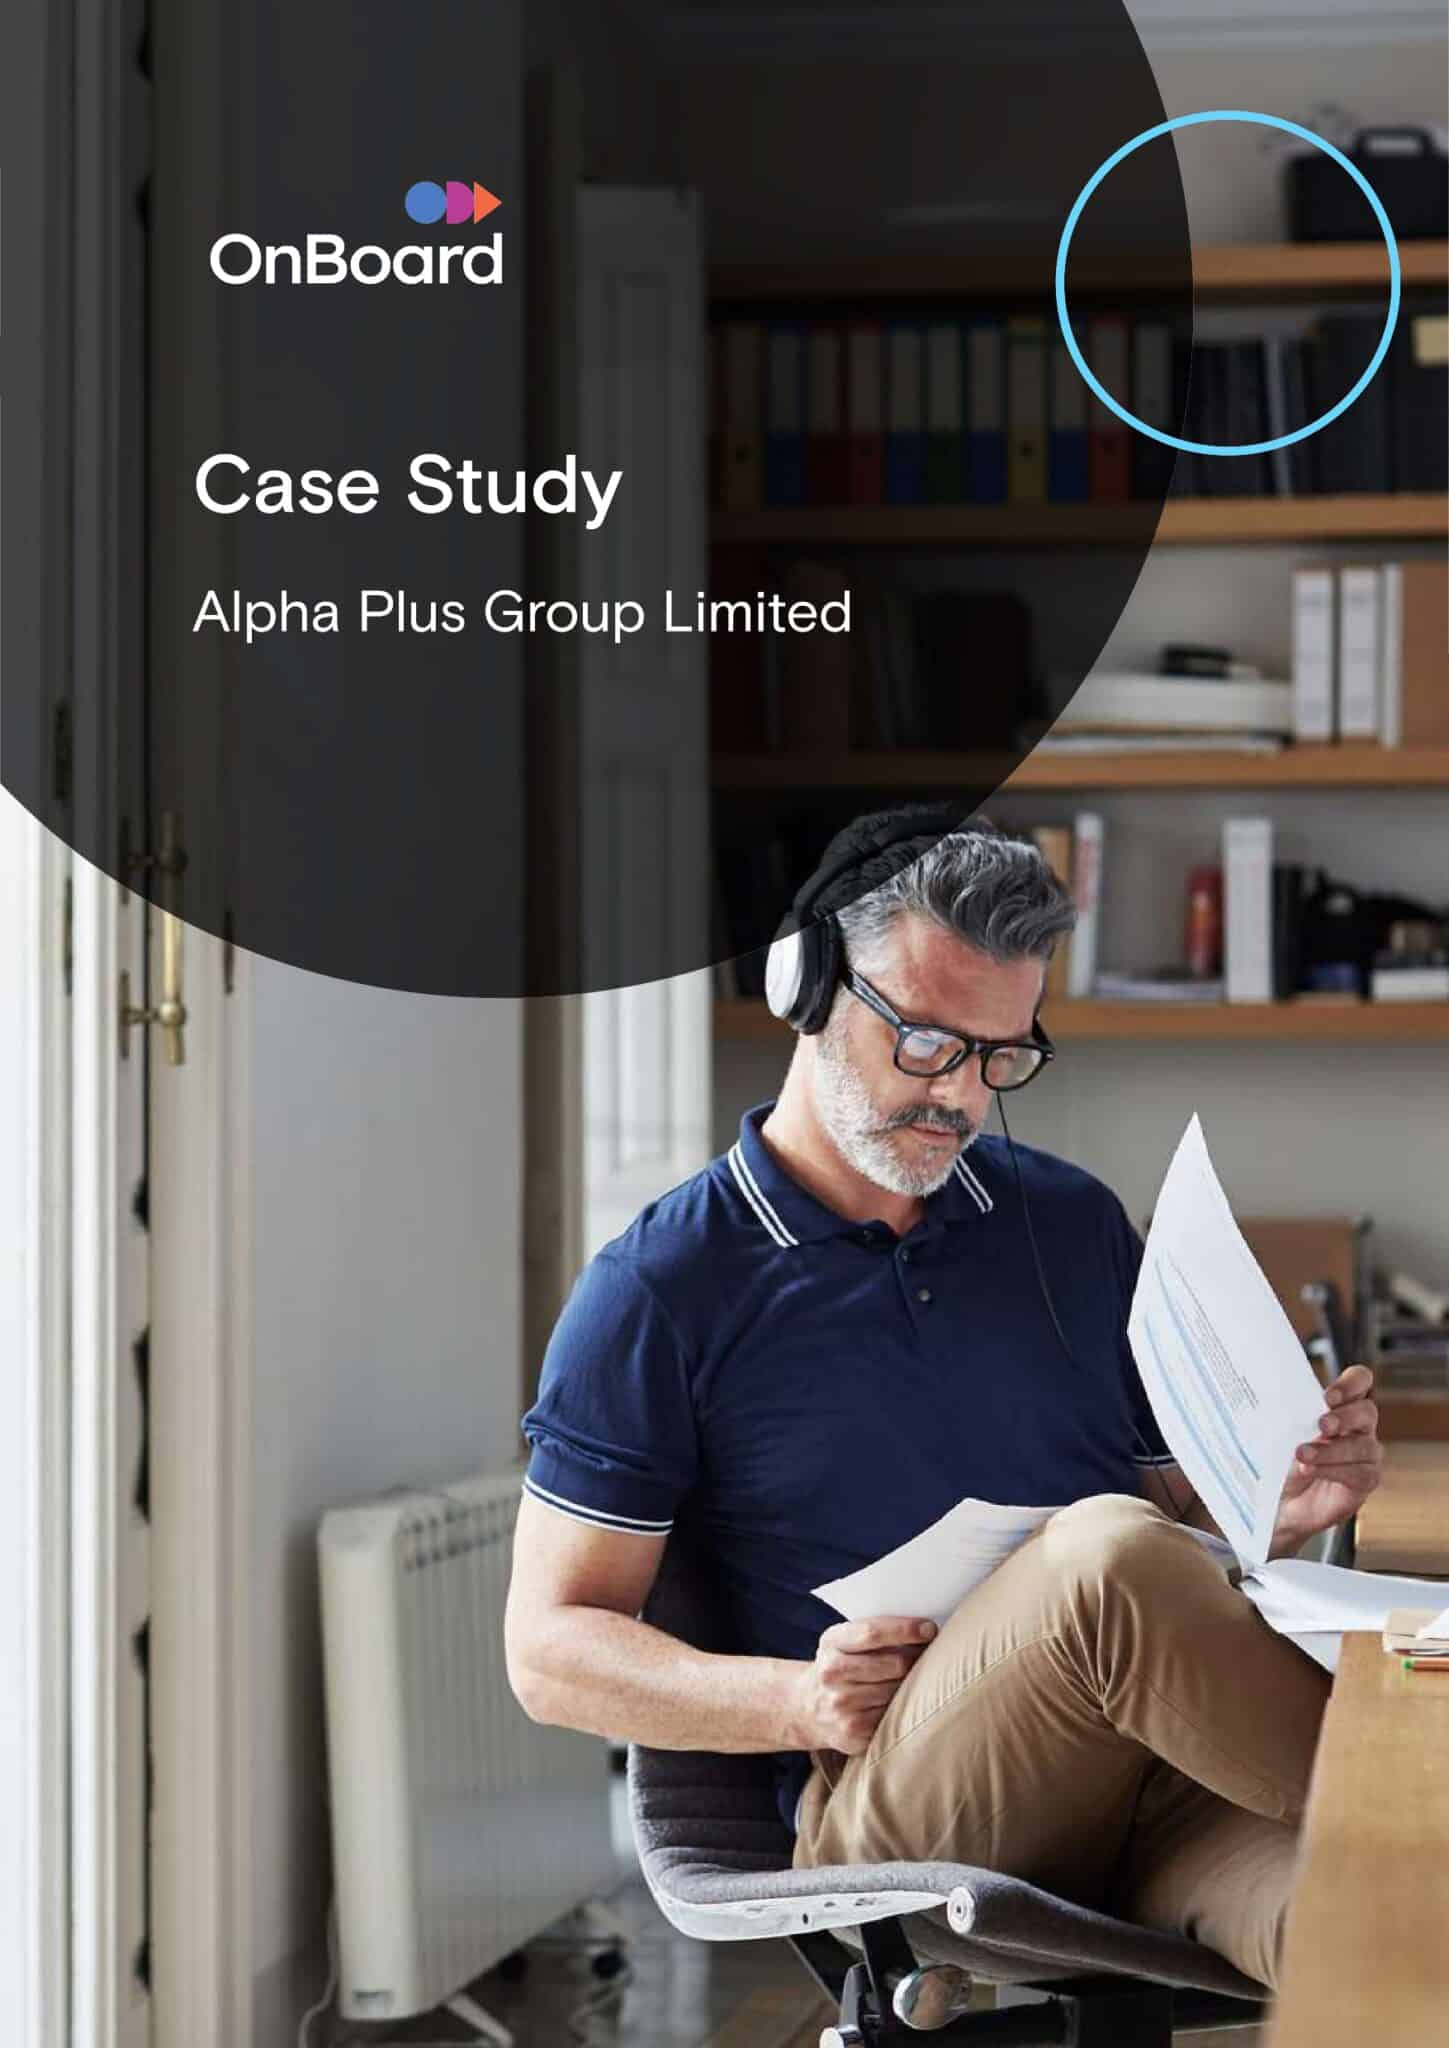 Alpha Plus Group Limited